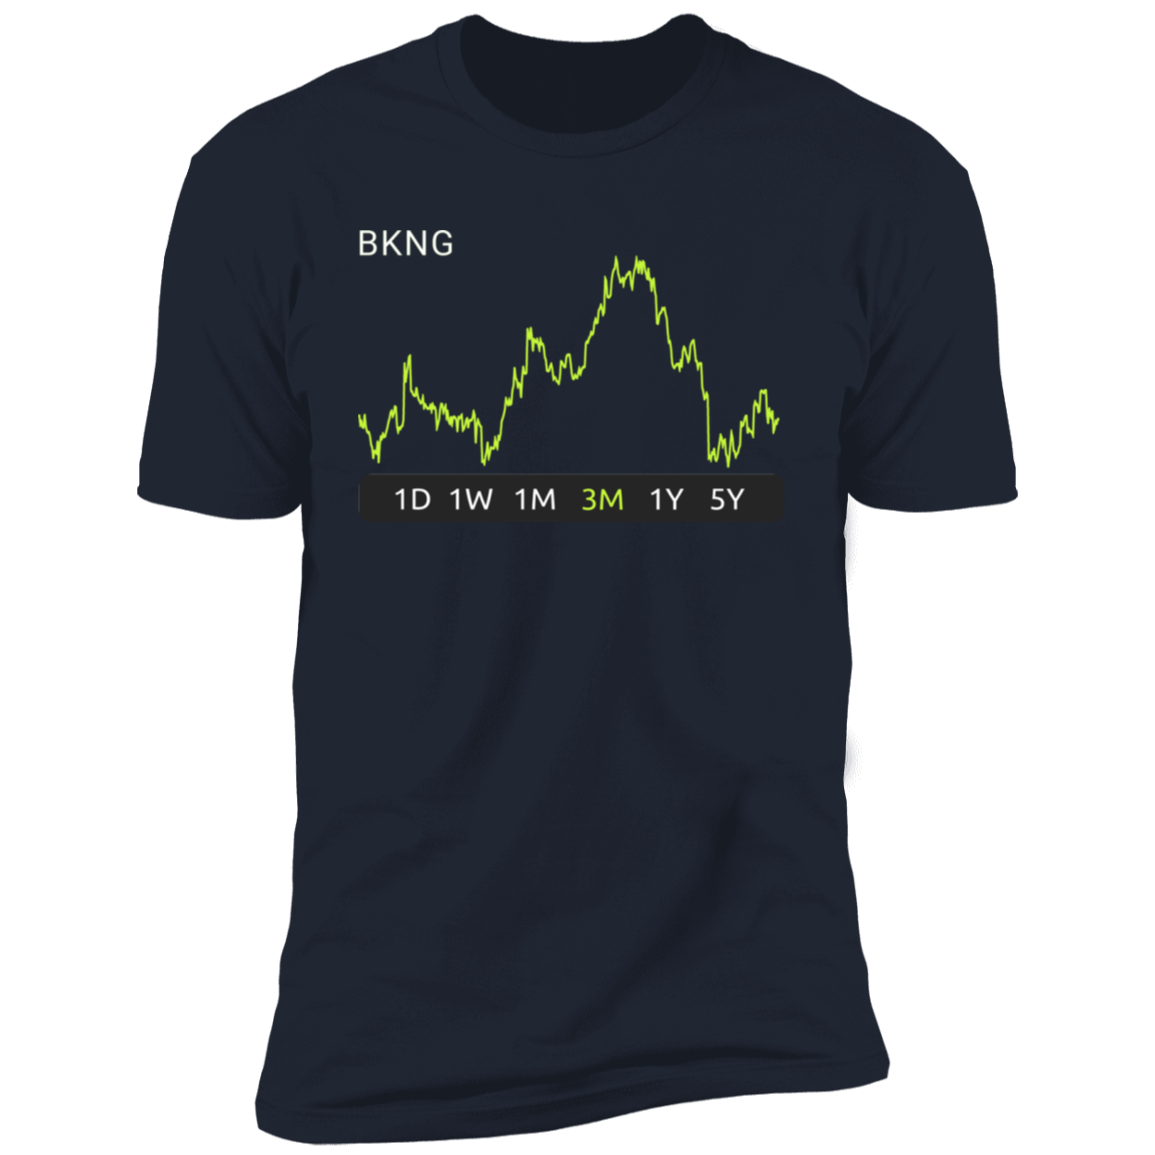 BKNG Stock 3m Premium T-Shirt